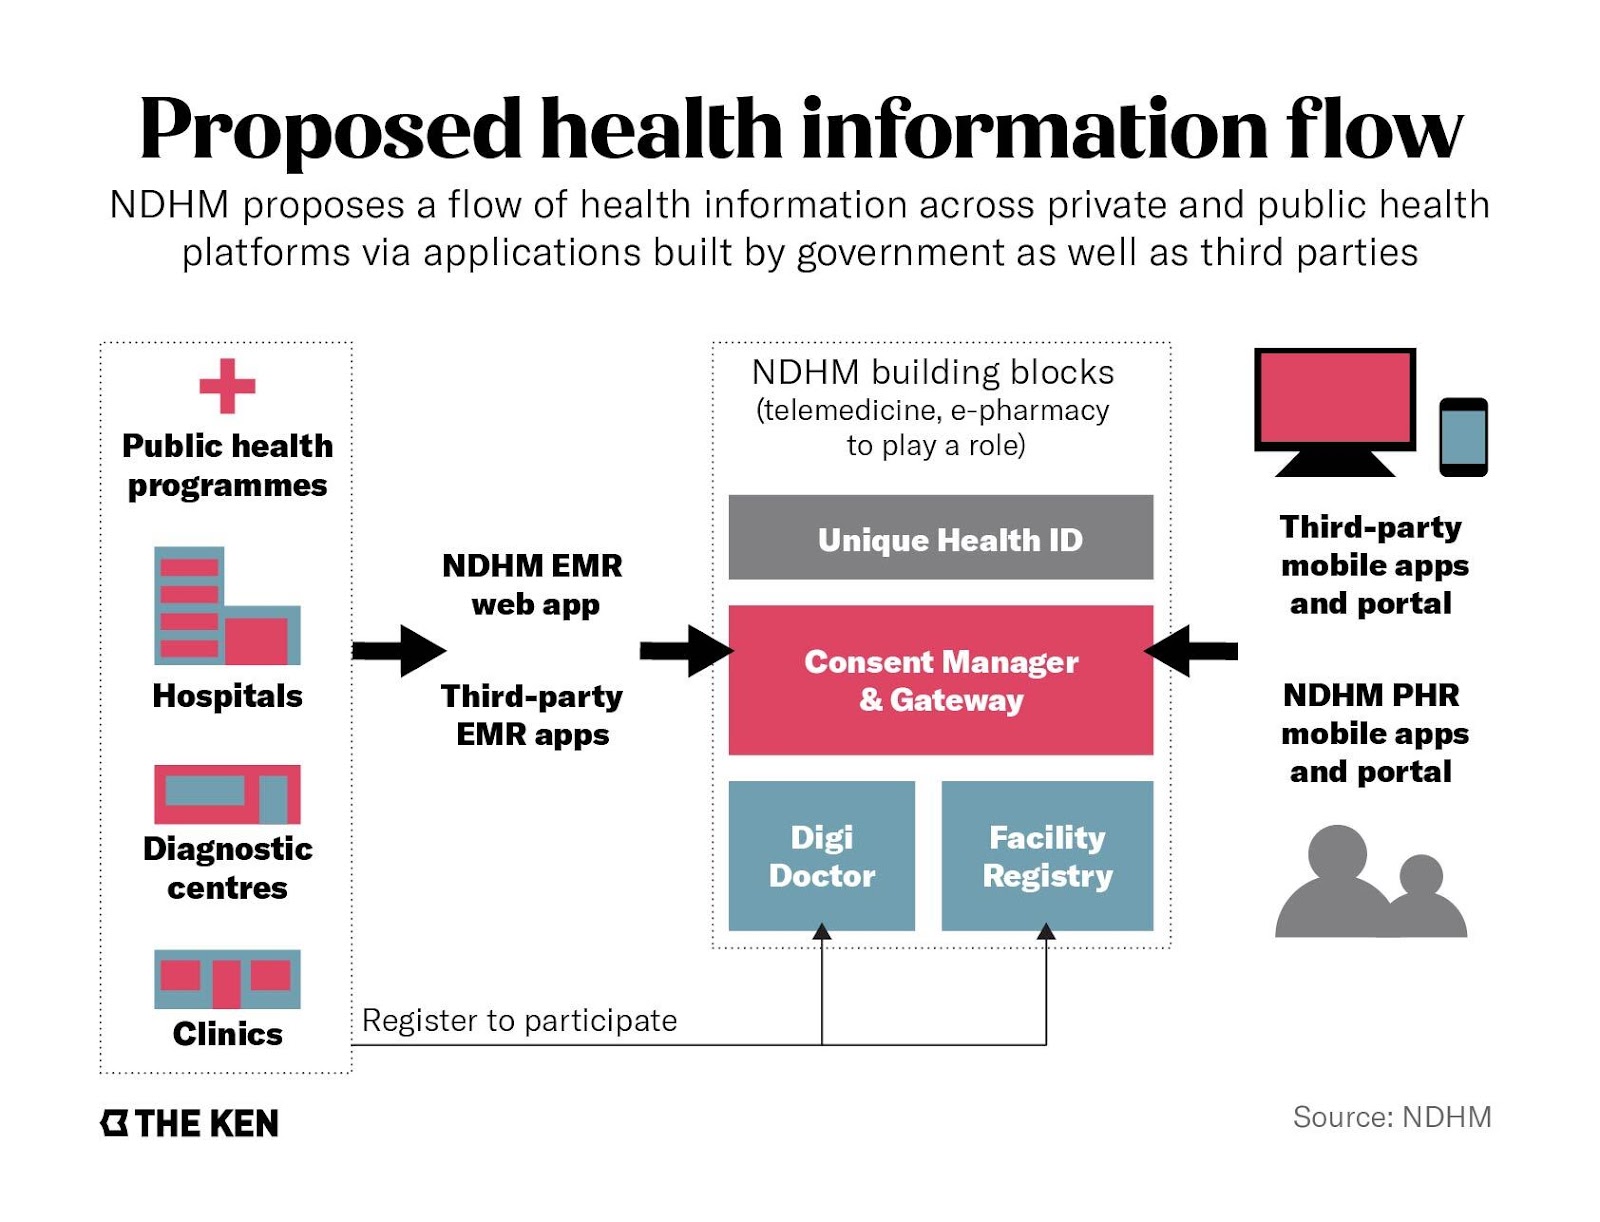 HealthStack Information Flow diagram, by The Ken